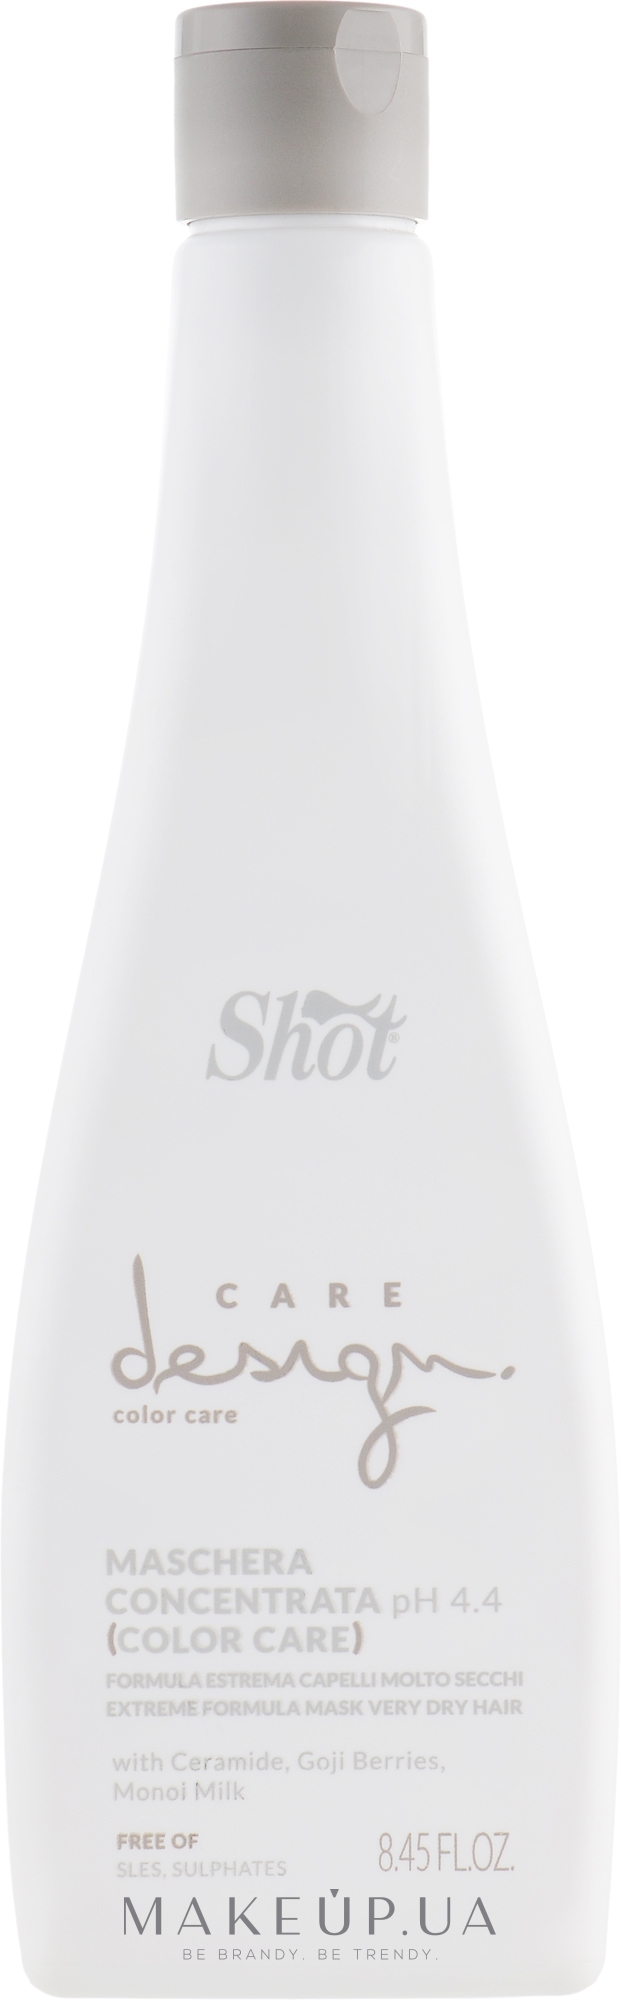 Маска-концентрат для фарбованого волосся - Shot Care Design Color Care Extreme Formula Mask Very Dry Hair — фото 250ml